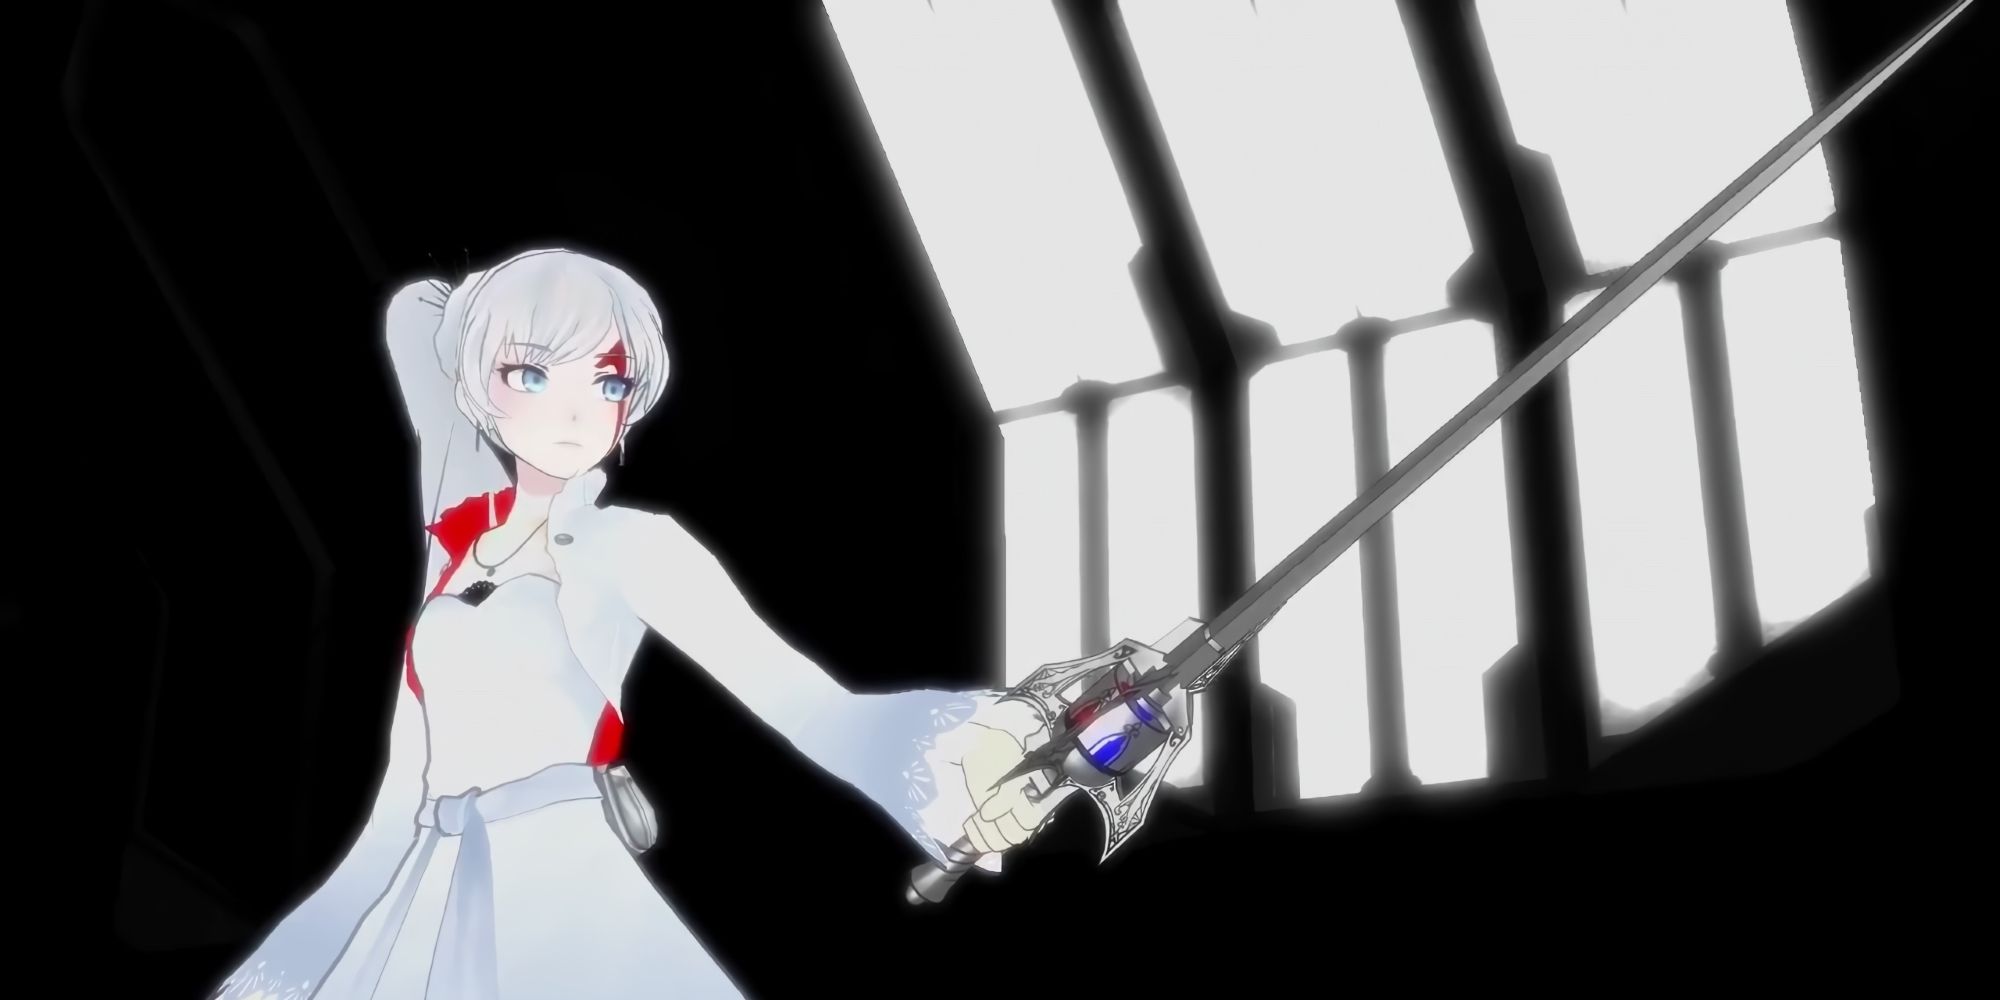 Weiss wielding her rapier Myrtenaster